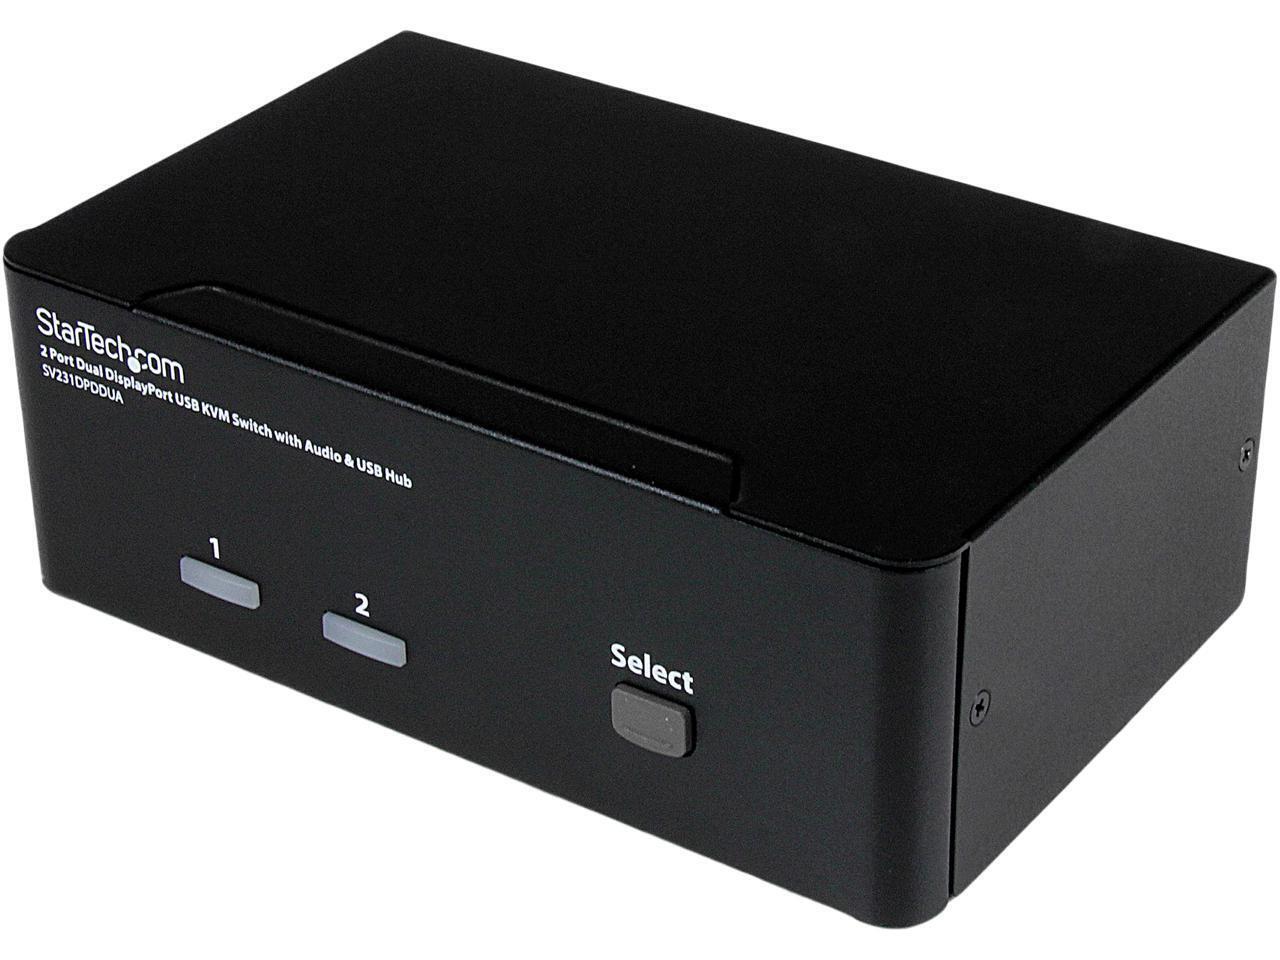 StarTech.com SV231DPDDUA 2 Port USB KVM Switch with Audio & USB 2.0 Hub